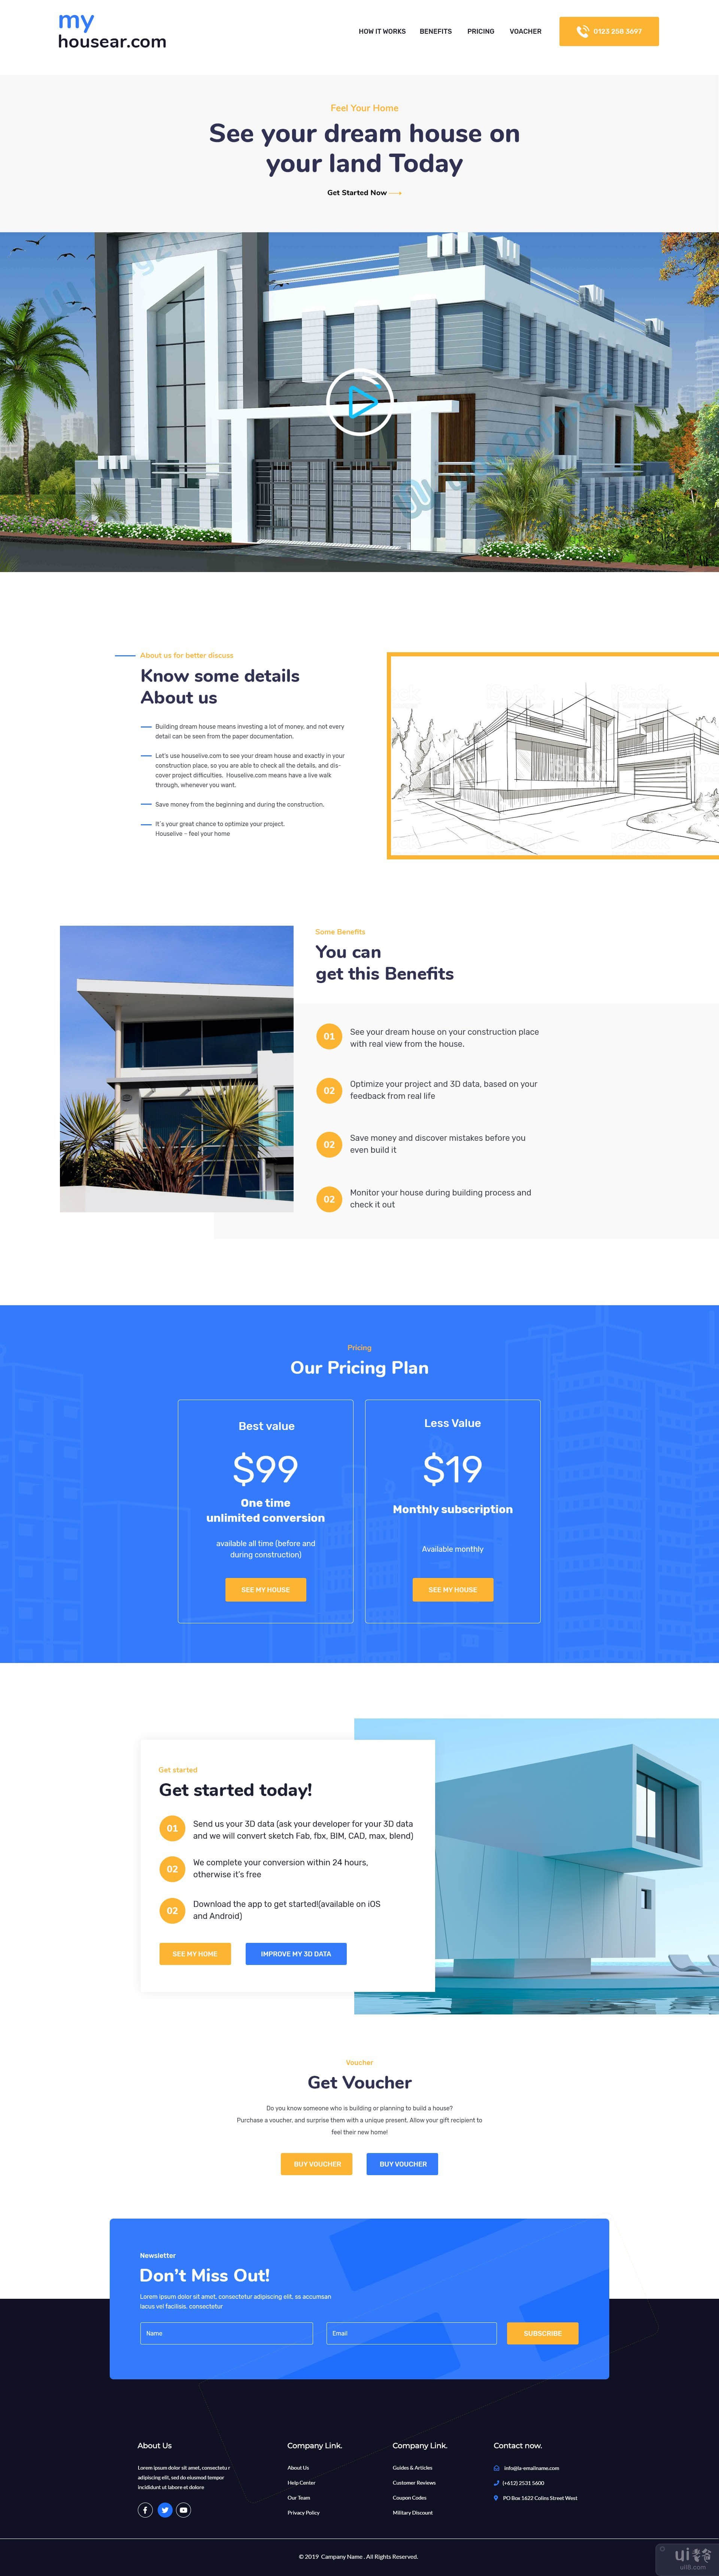 房地产登陆页面WEB UI设计(Real estate landing page WEB UI design)插图